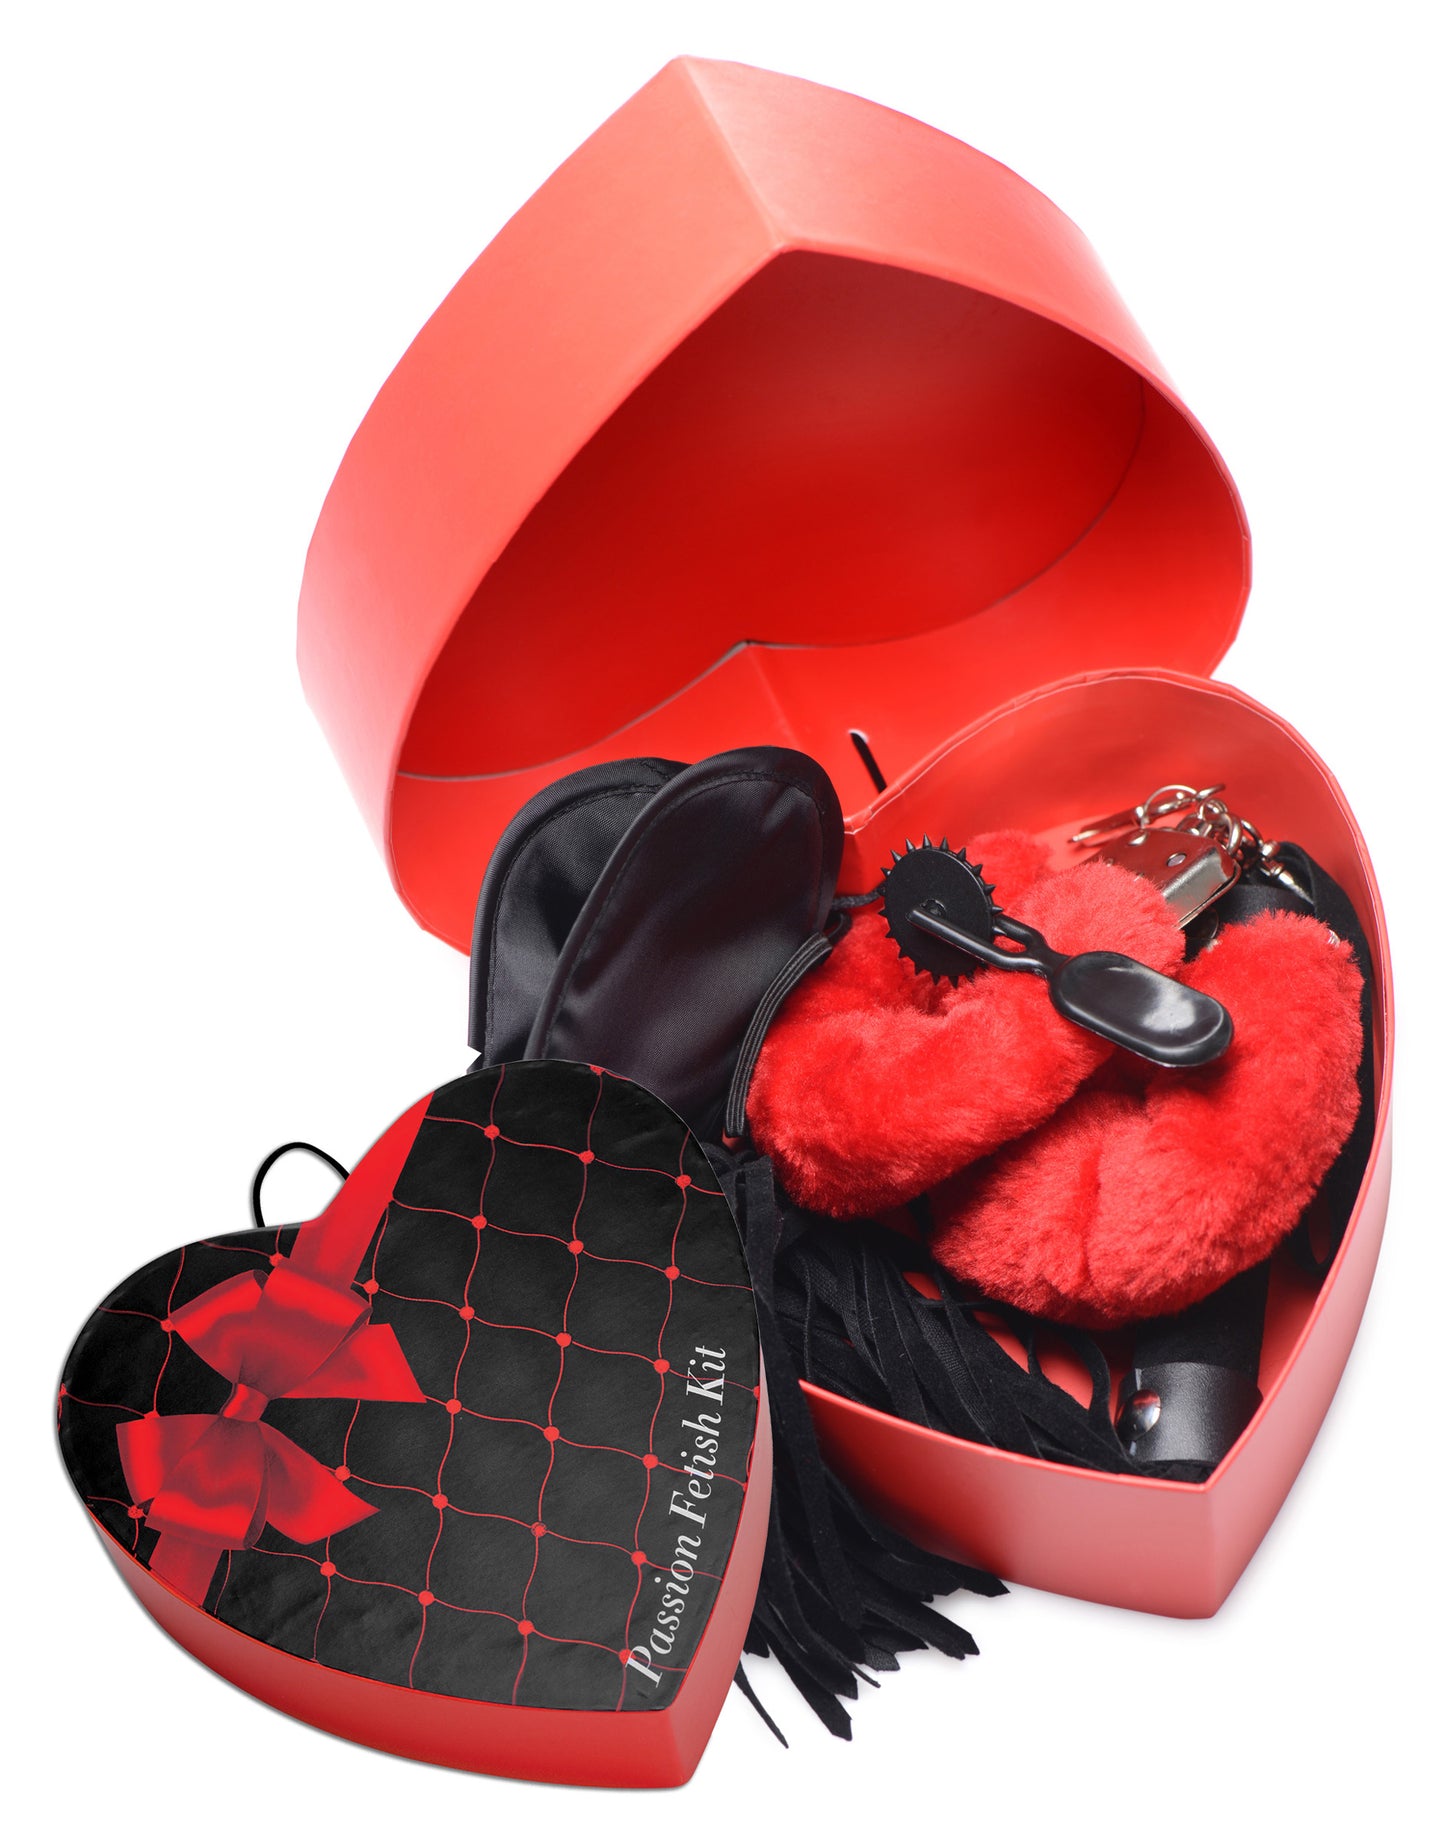 Passion Fetish Kit with Heart Gift Box - UABDSM